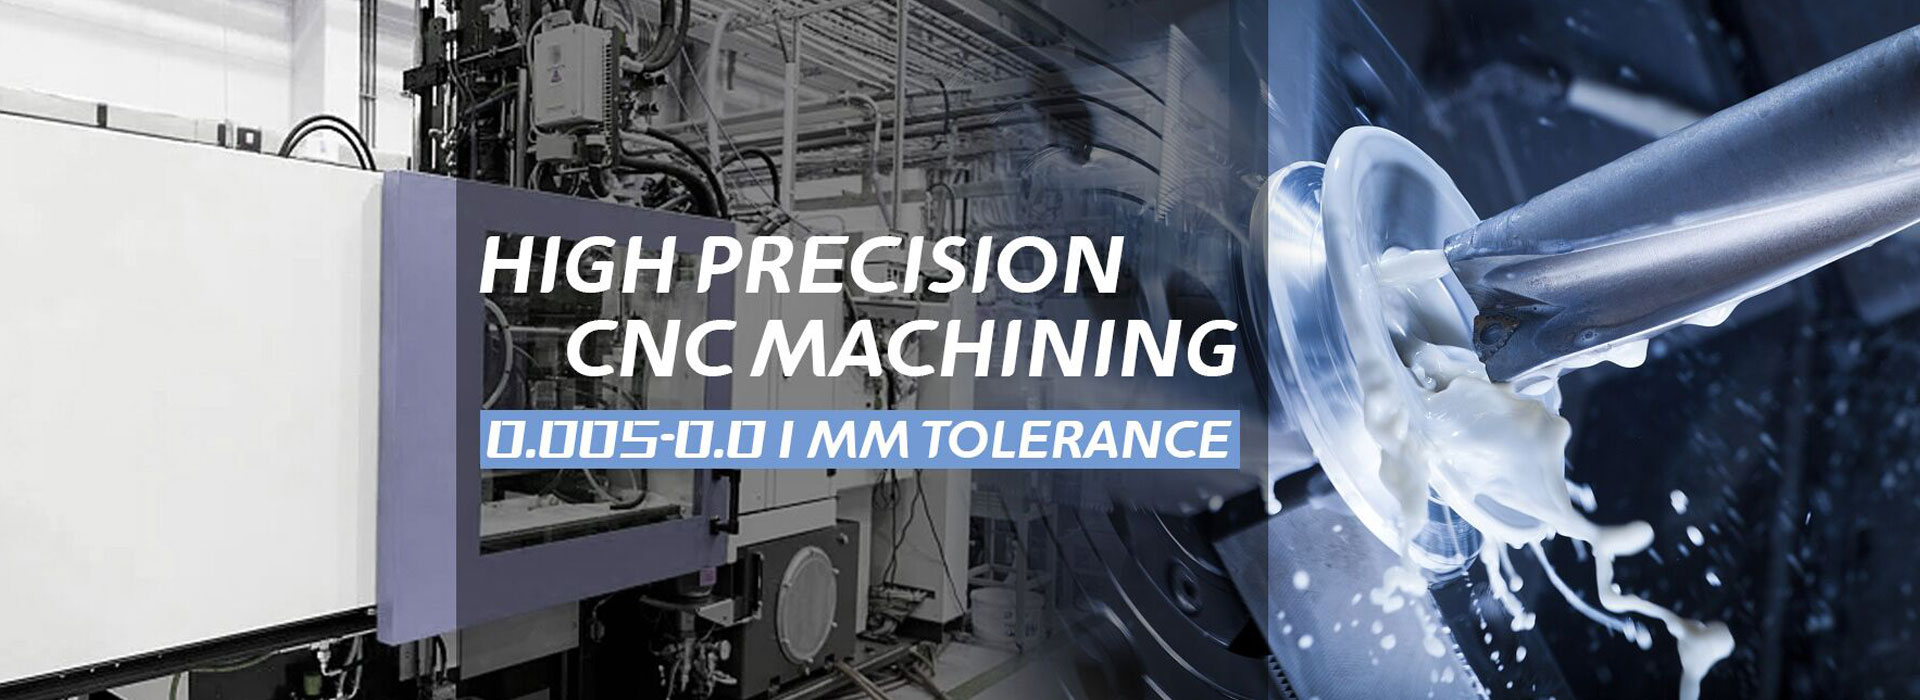 Mecanizado CNC de alta precisión